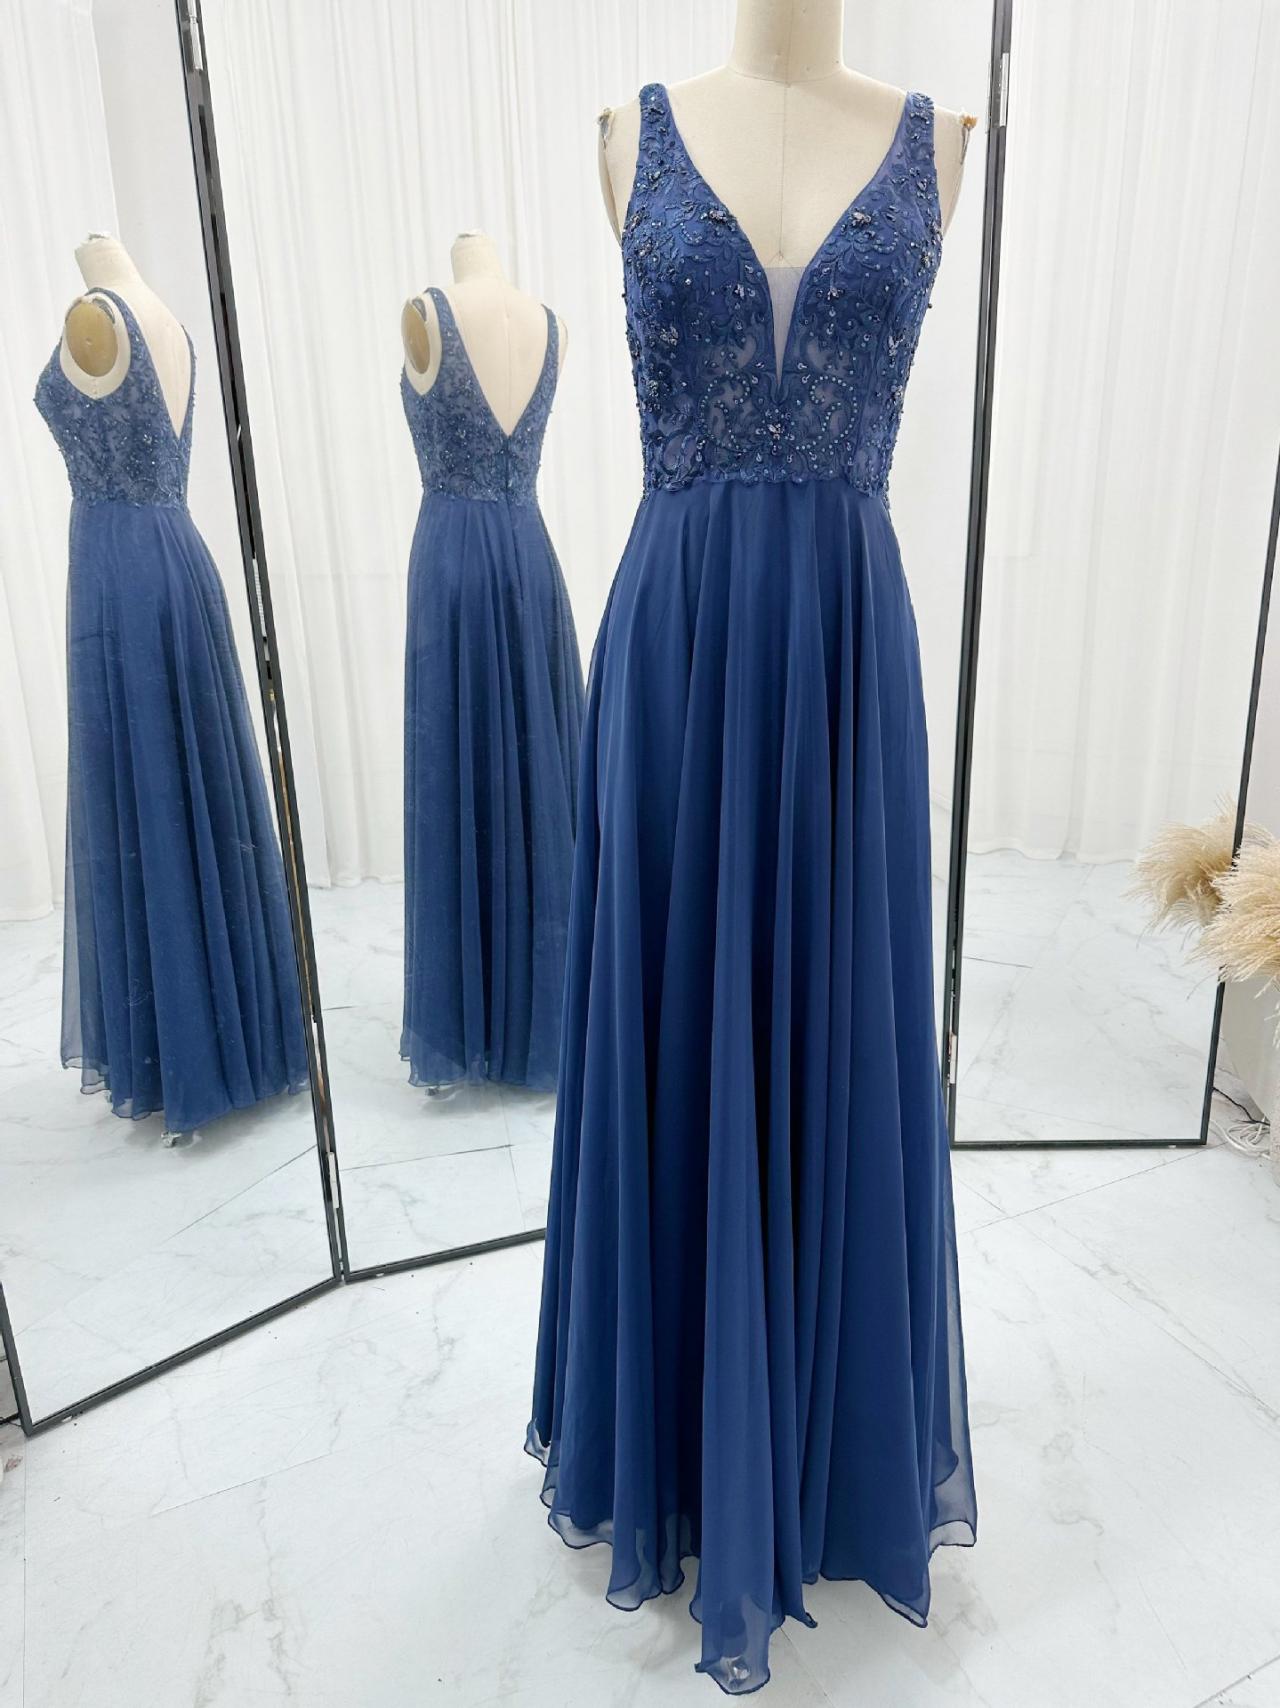 Dark Blue Chiffon Floor Length Long Prom Dress